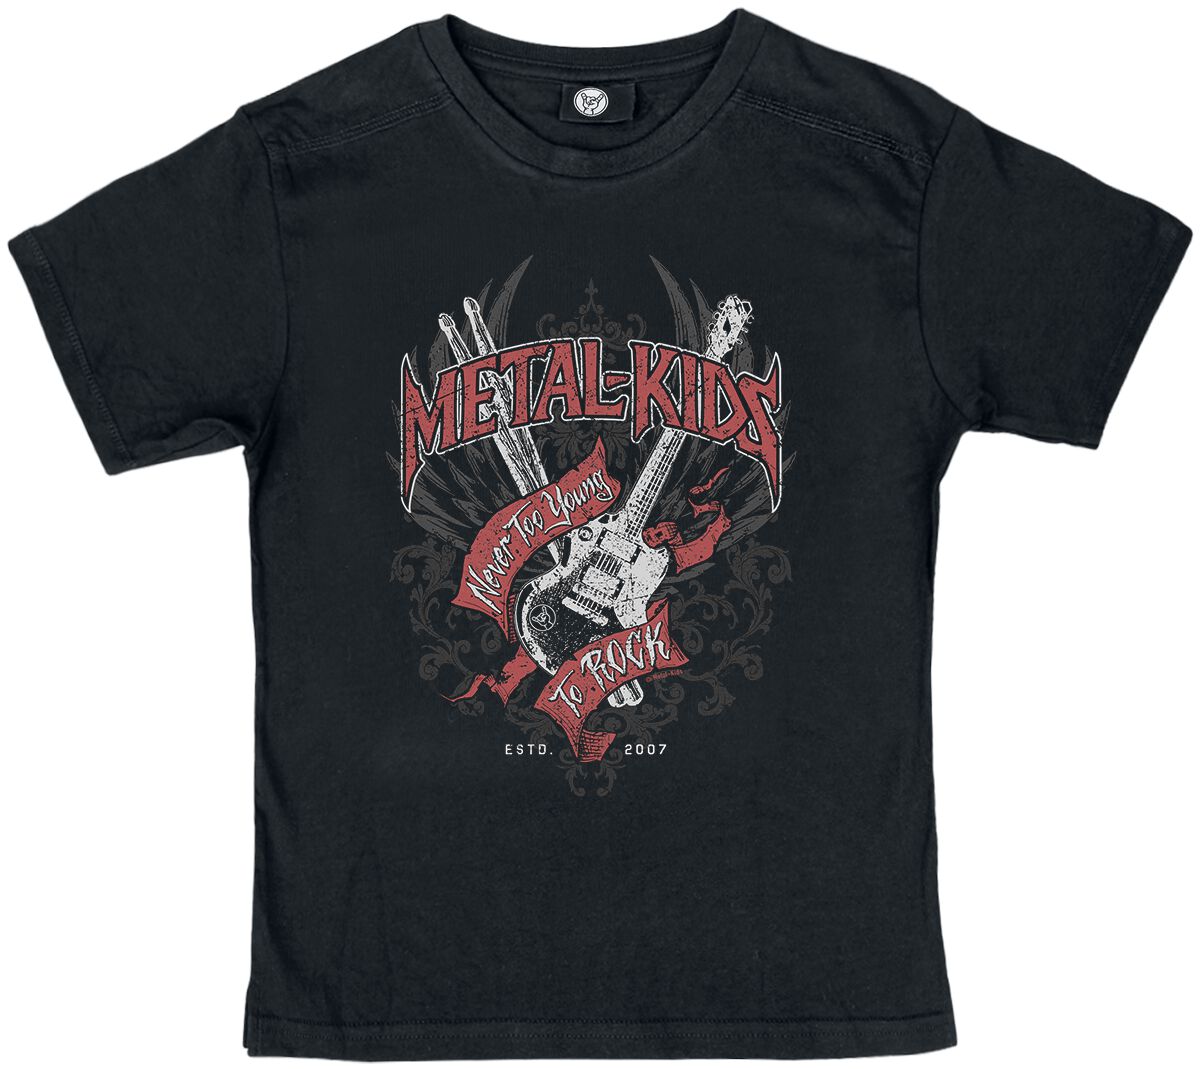 T-shirt de Metal Kids - Never Too Young To Rock - 104 à 164 - pour filles & garçonse - noir